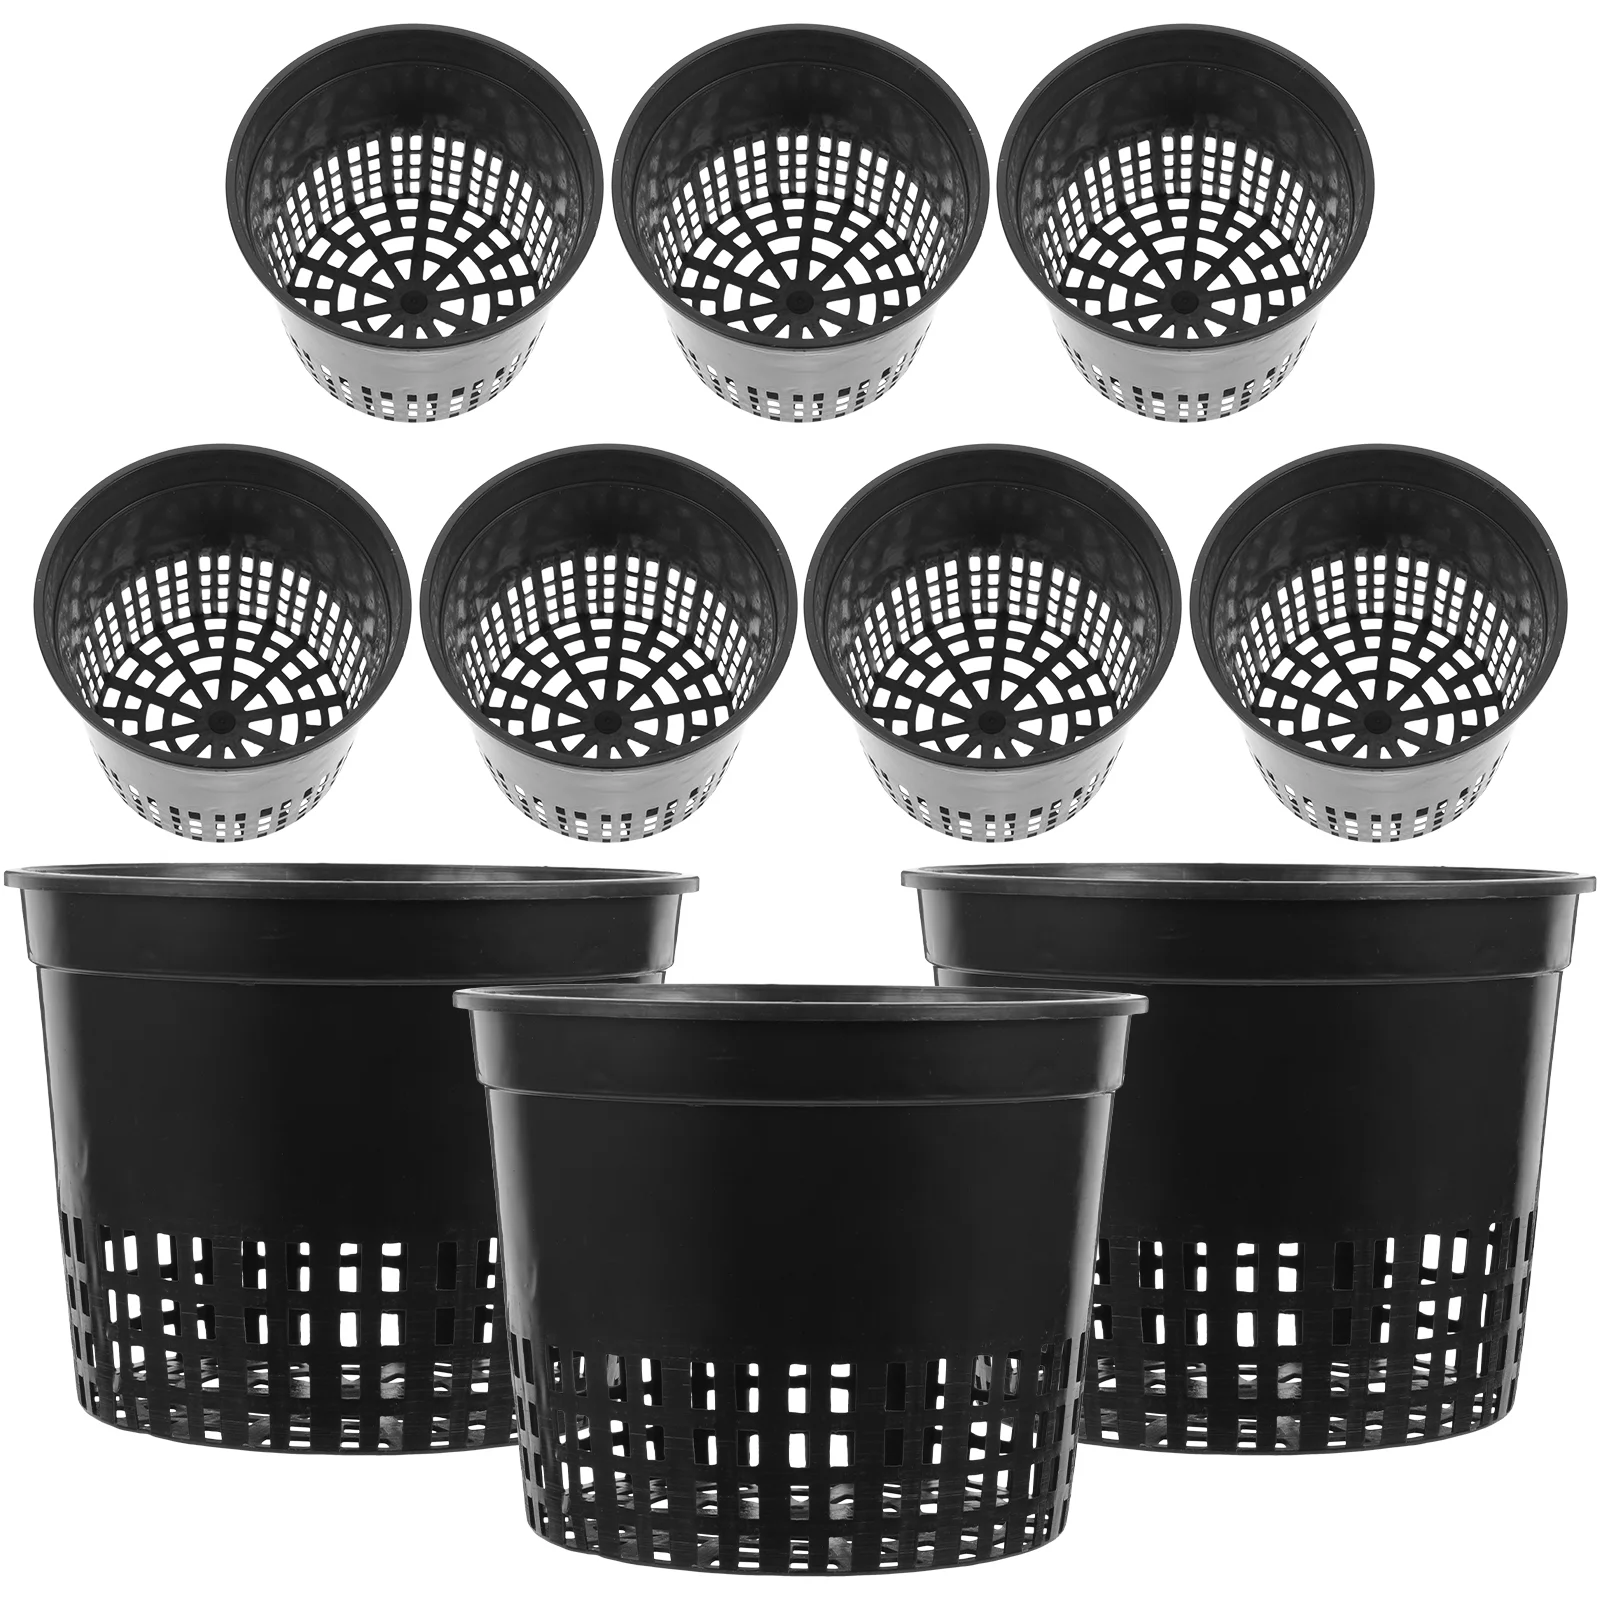 

10pcs Plastic Potss Pot Slotted Mesh Net Cups Nursery Pots Bucket Basket for Gardening Hydroponics Aquaponics Orchids